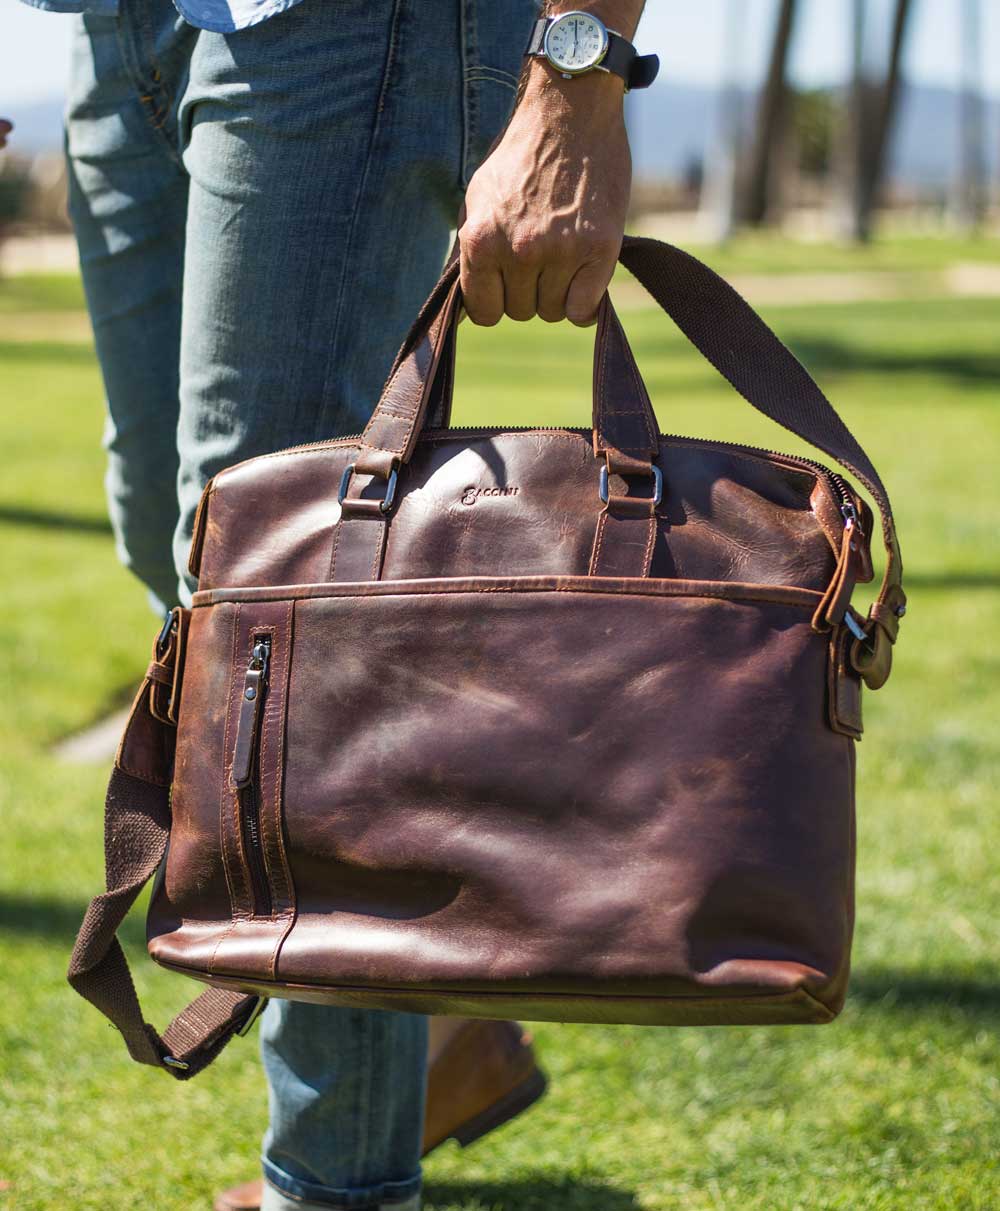 Best affordable leather briefcase under $100